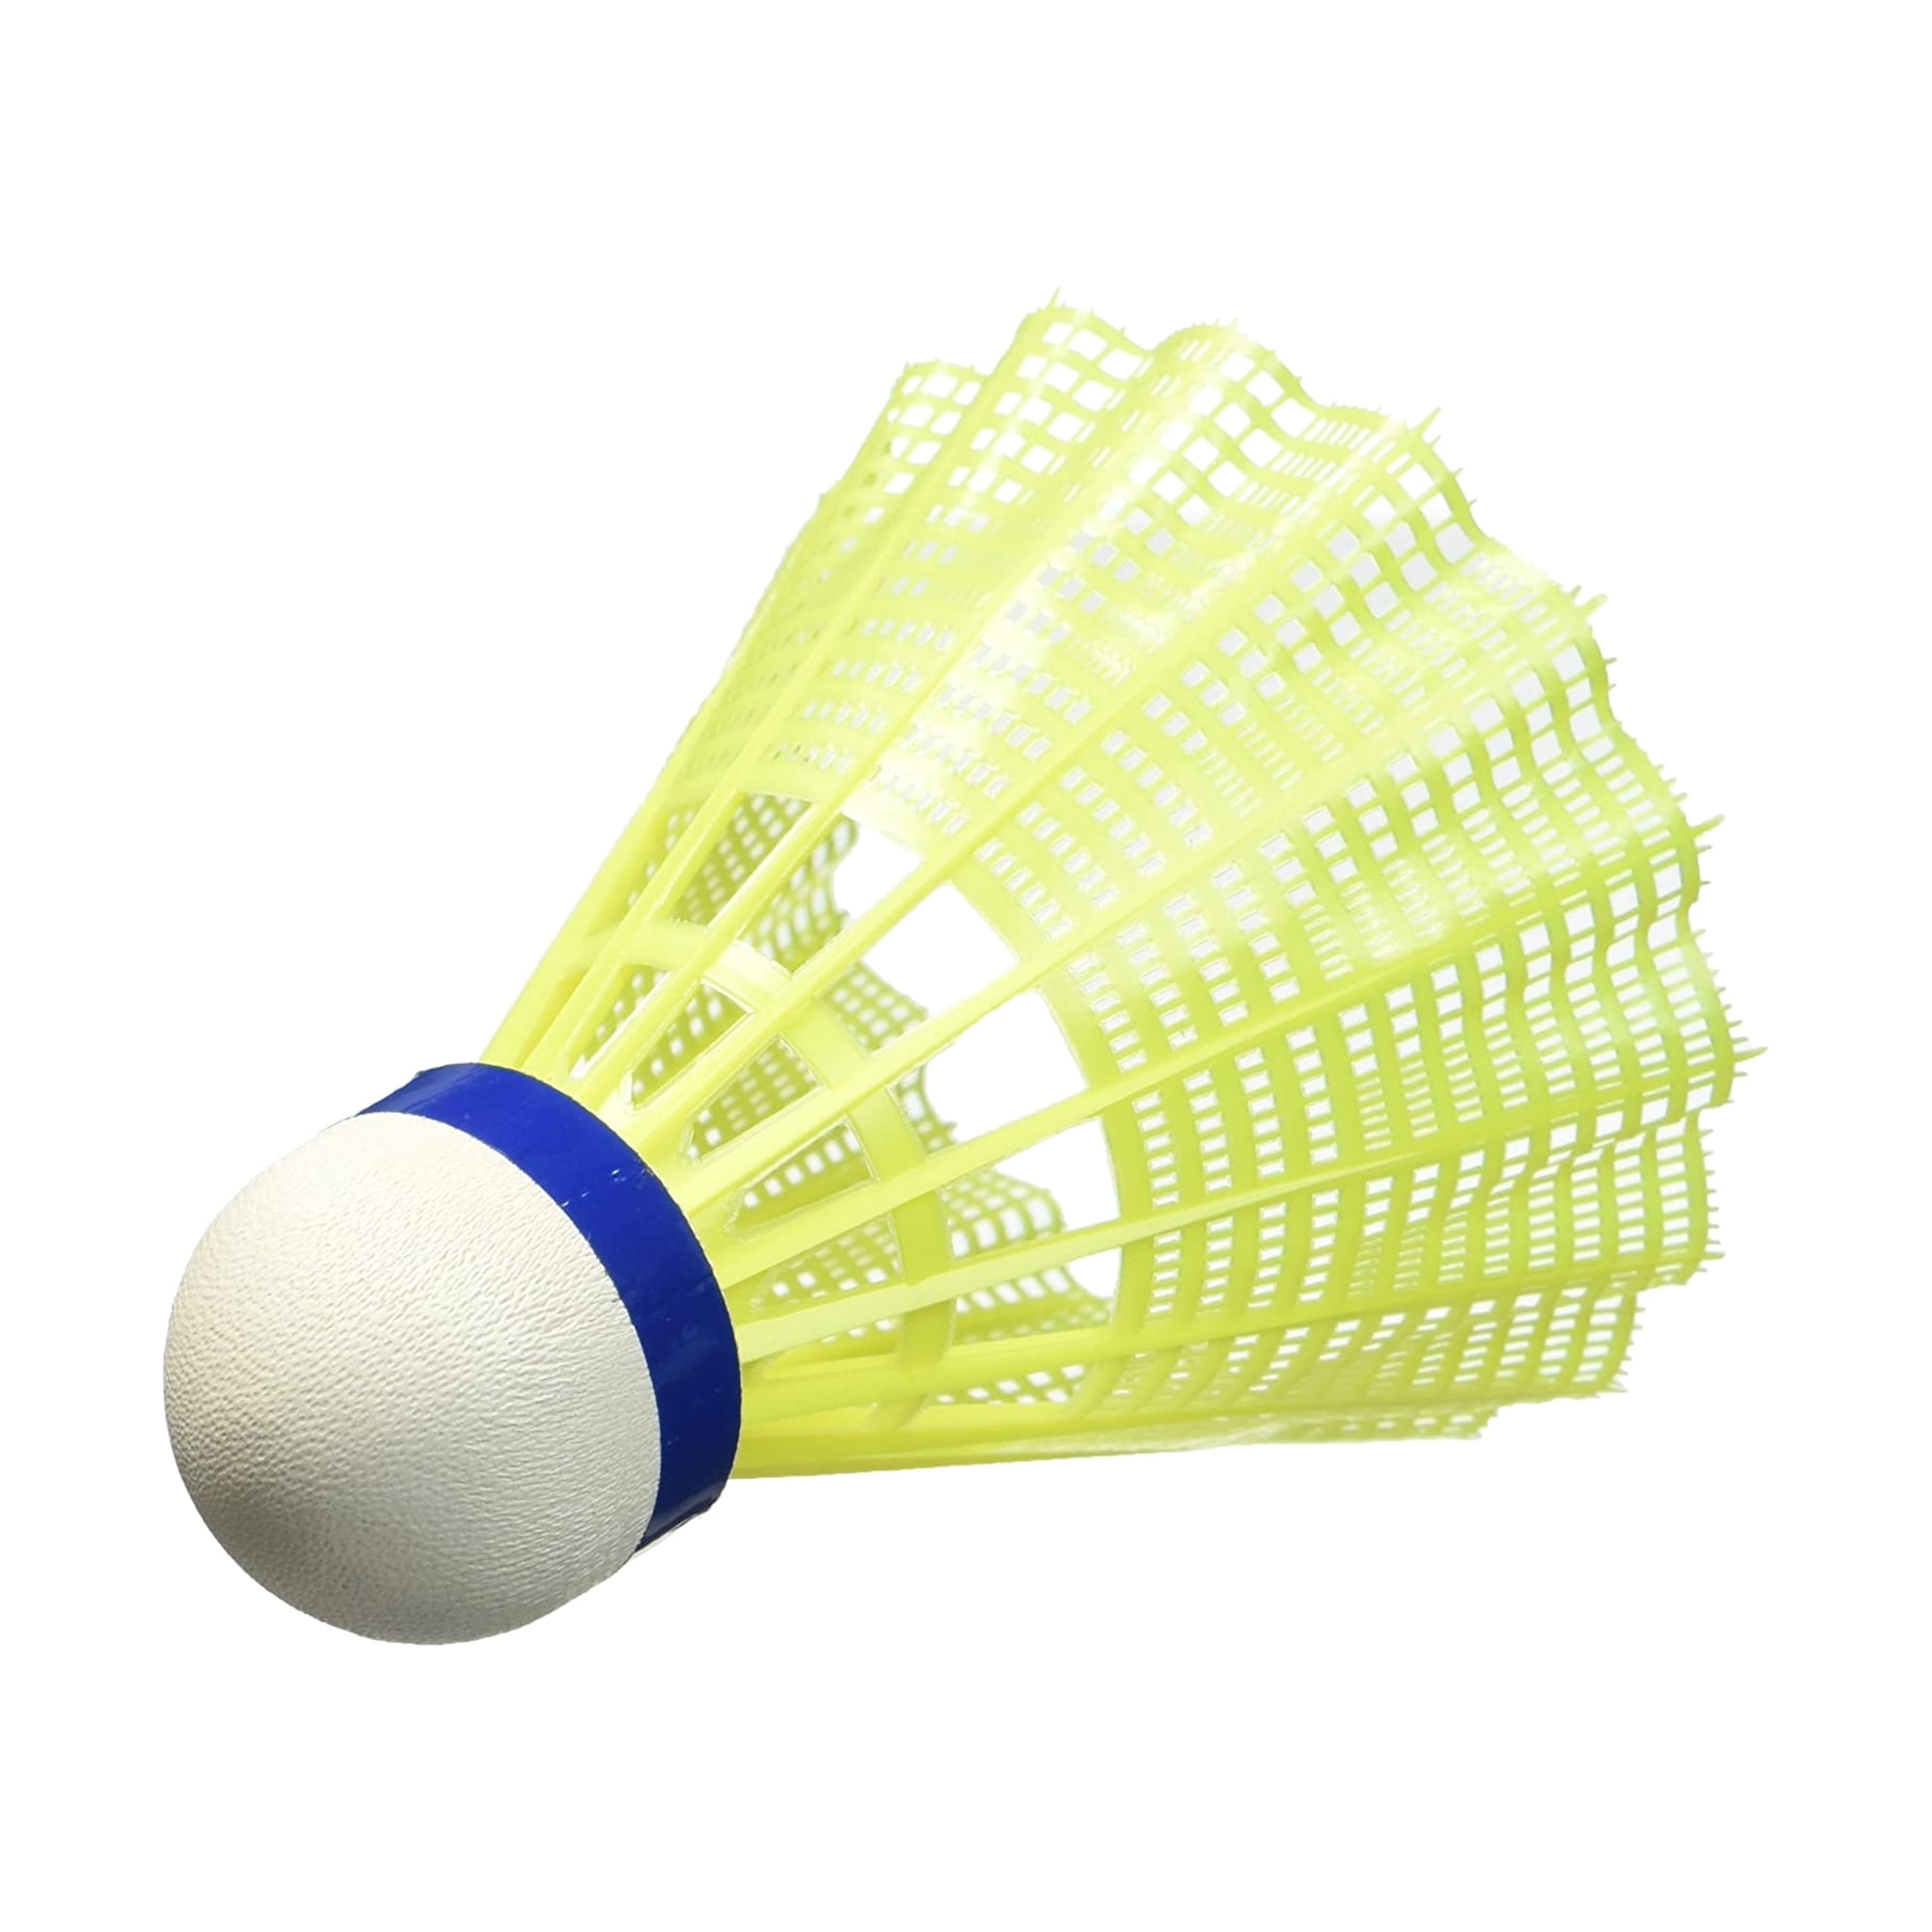 Badminton shuttlecocks yonex 3pack mavis 300 